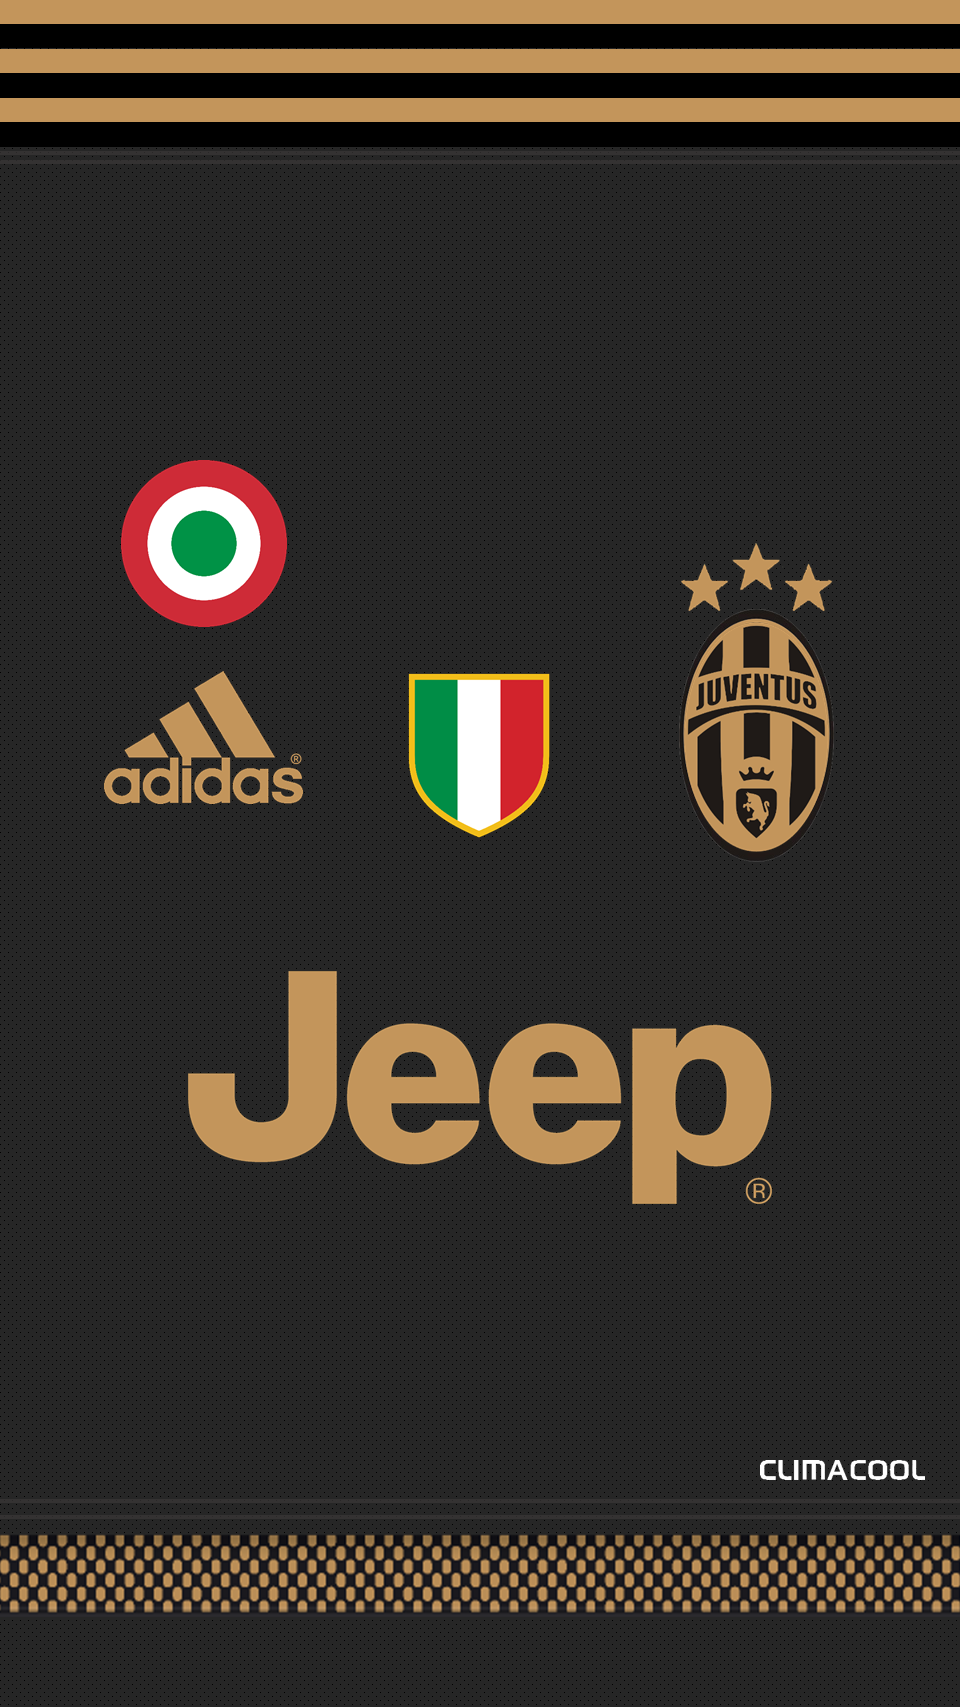 Juventus3_patch_simple.png